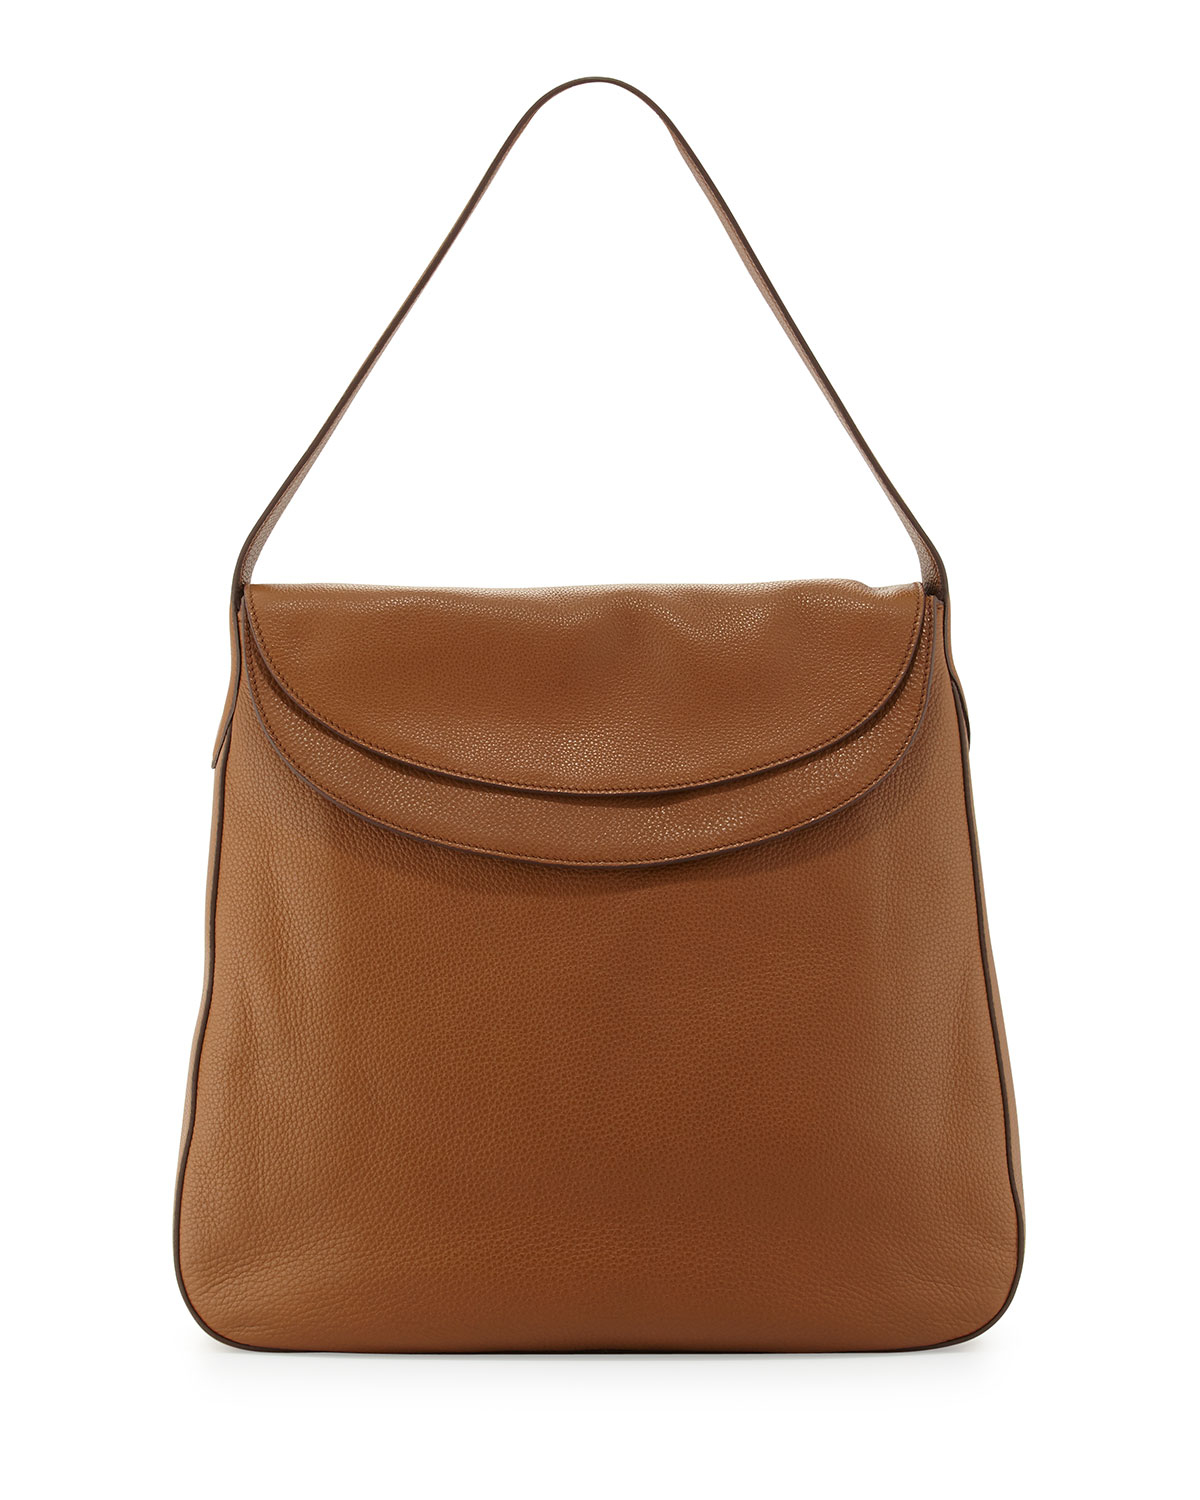 Prada Vitello Daino Double Flap Top Leather Hobo Bag in Brown ...  